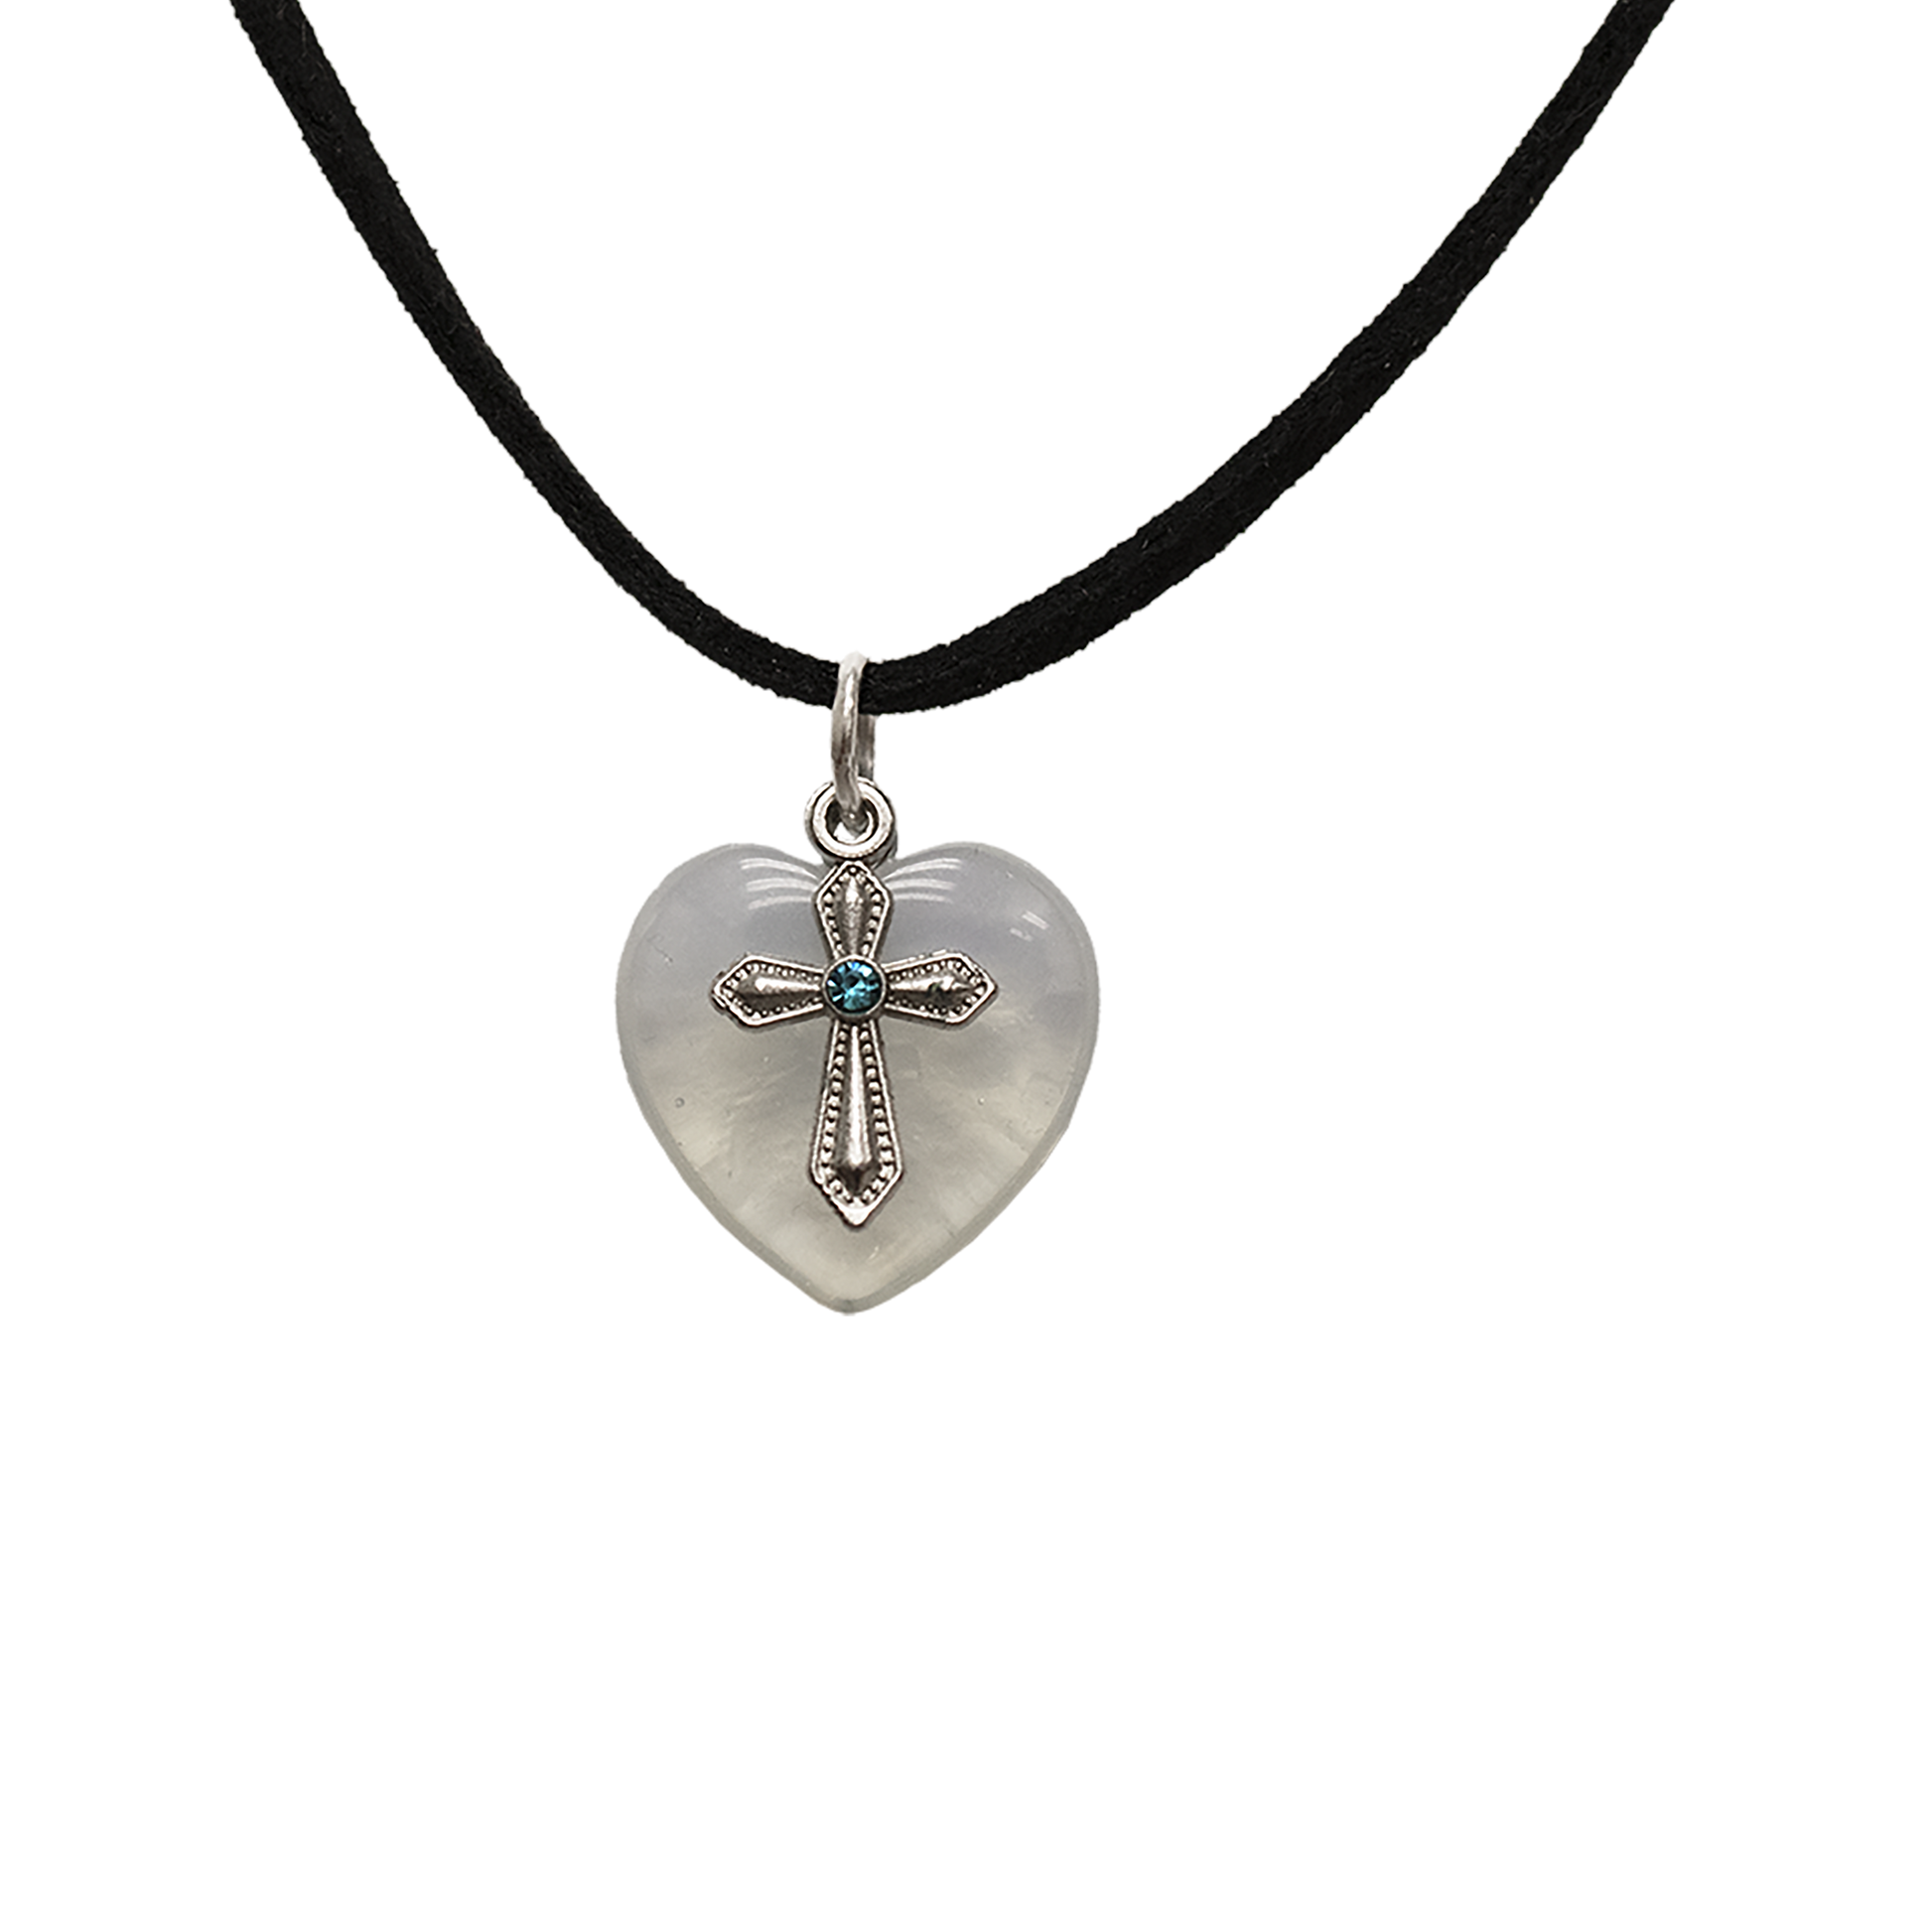 Polished Girasol Quartz Heart with decorative cross pendant on a black cord 